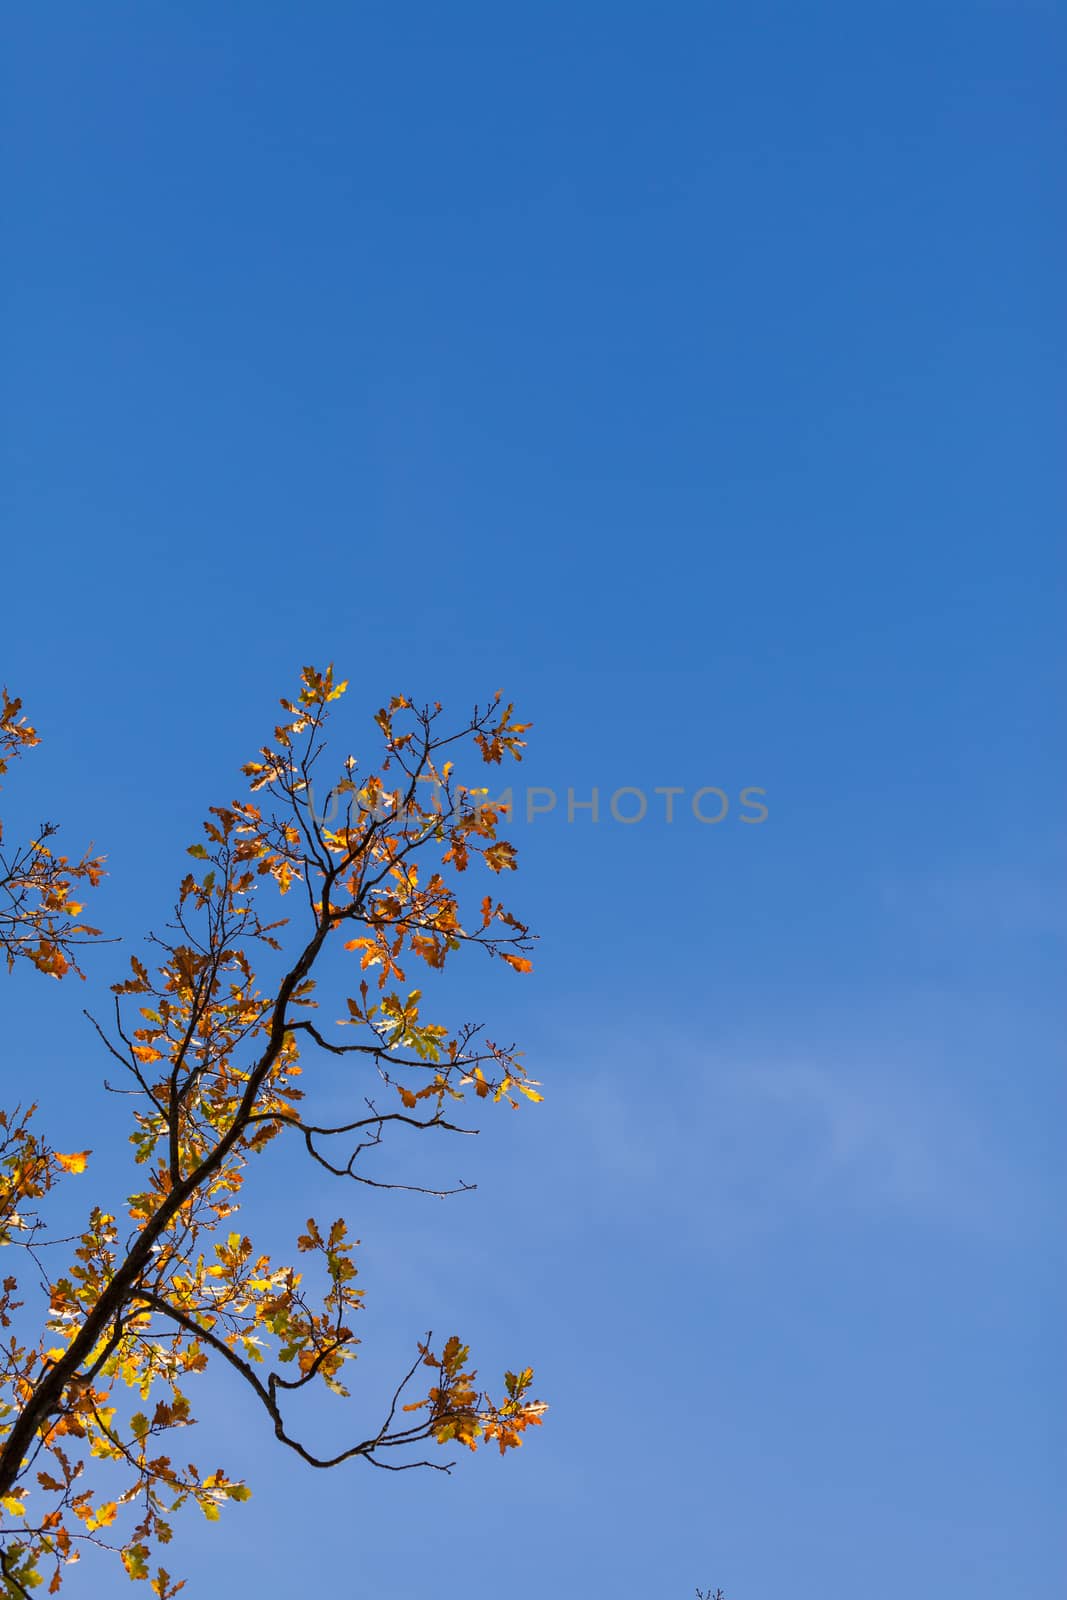 Autumn maple leaves against blue sky by igor_stramyk